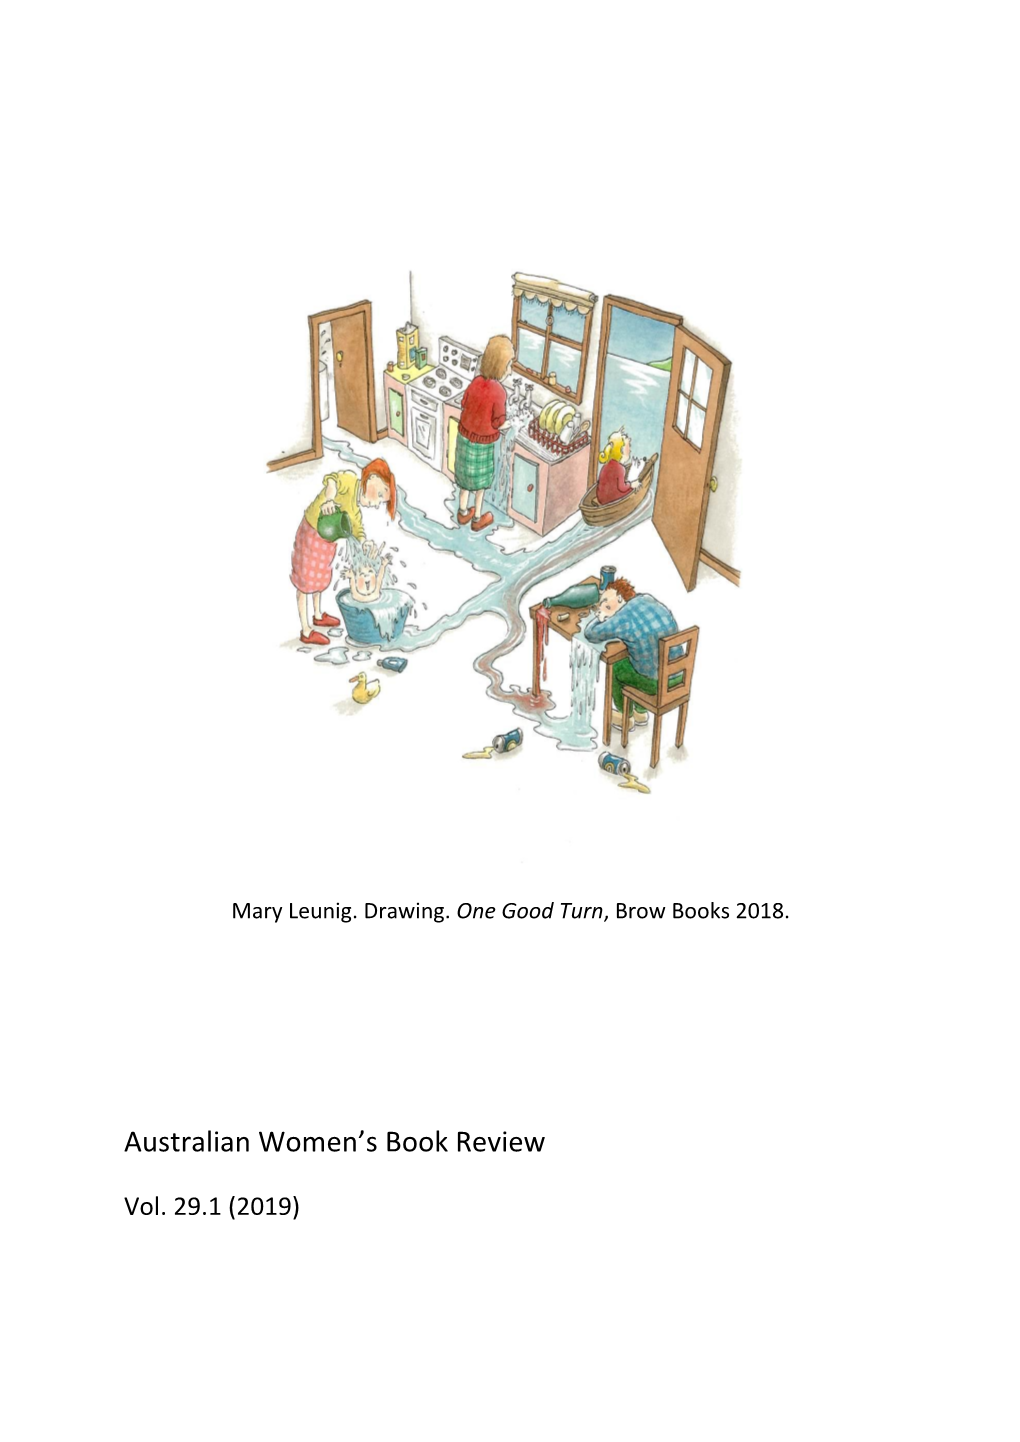 Australian Women's Book Review